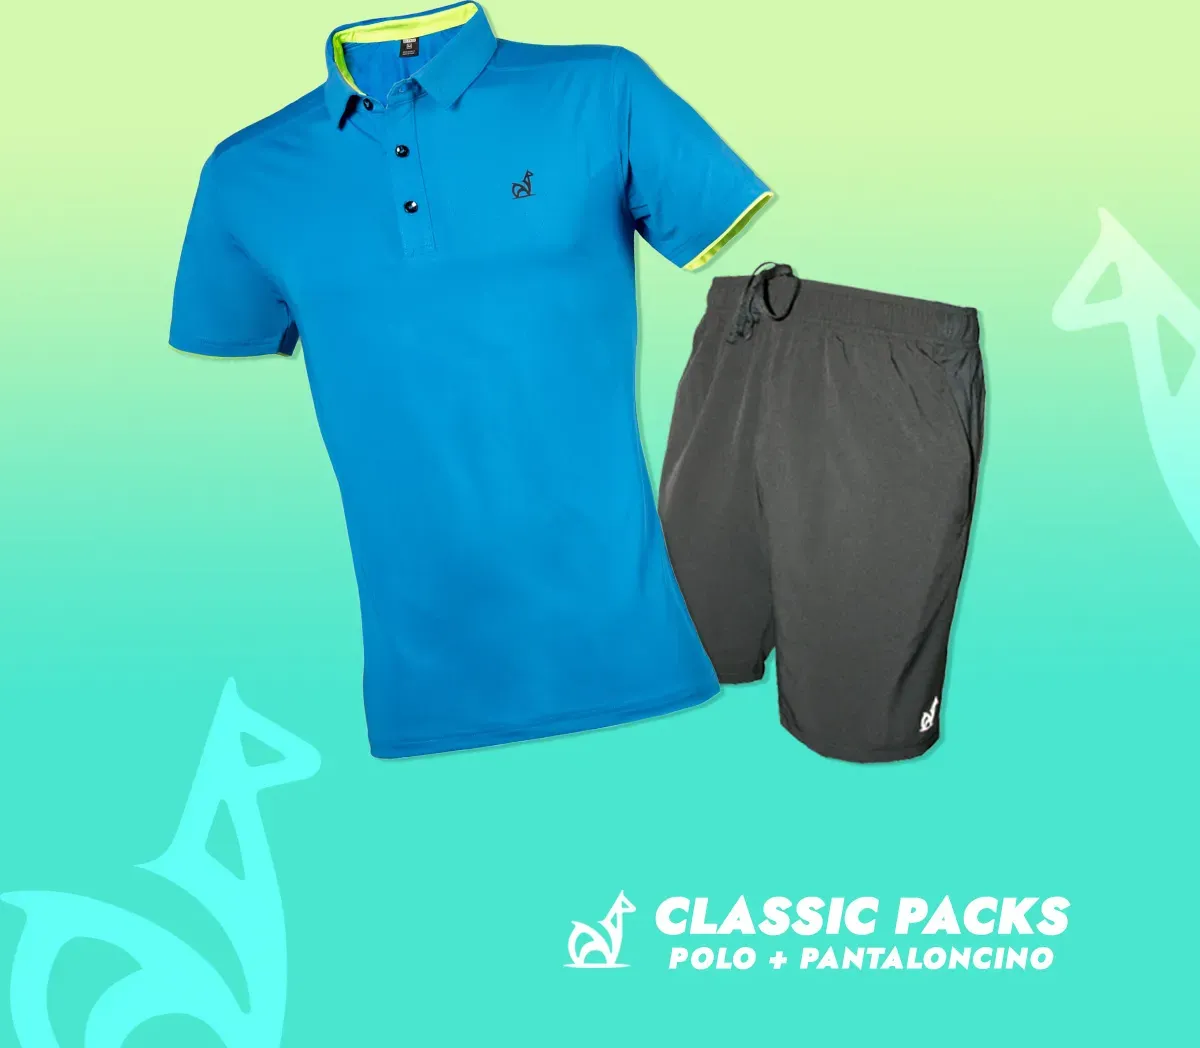 CLASSIC PACKS polo blue + pantaloncino grey